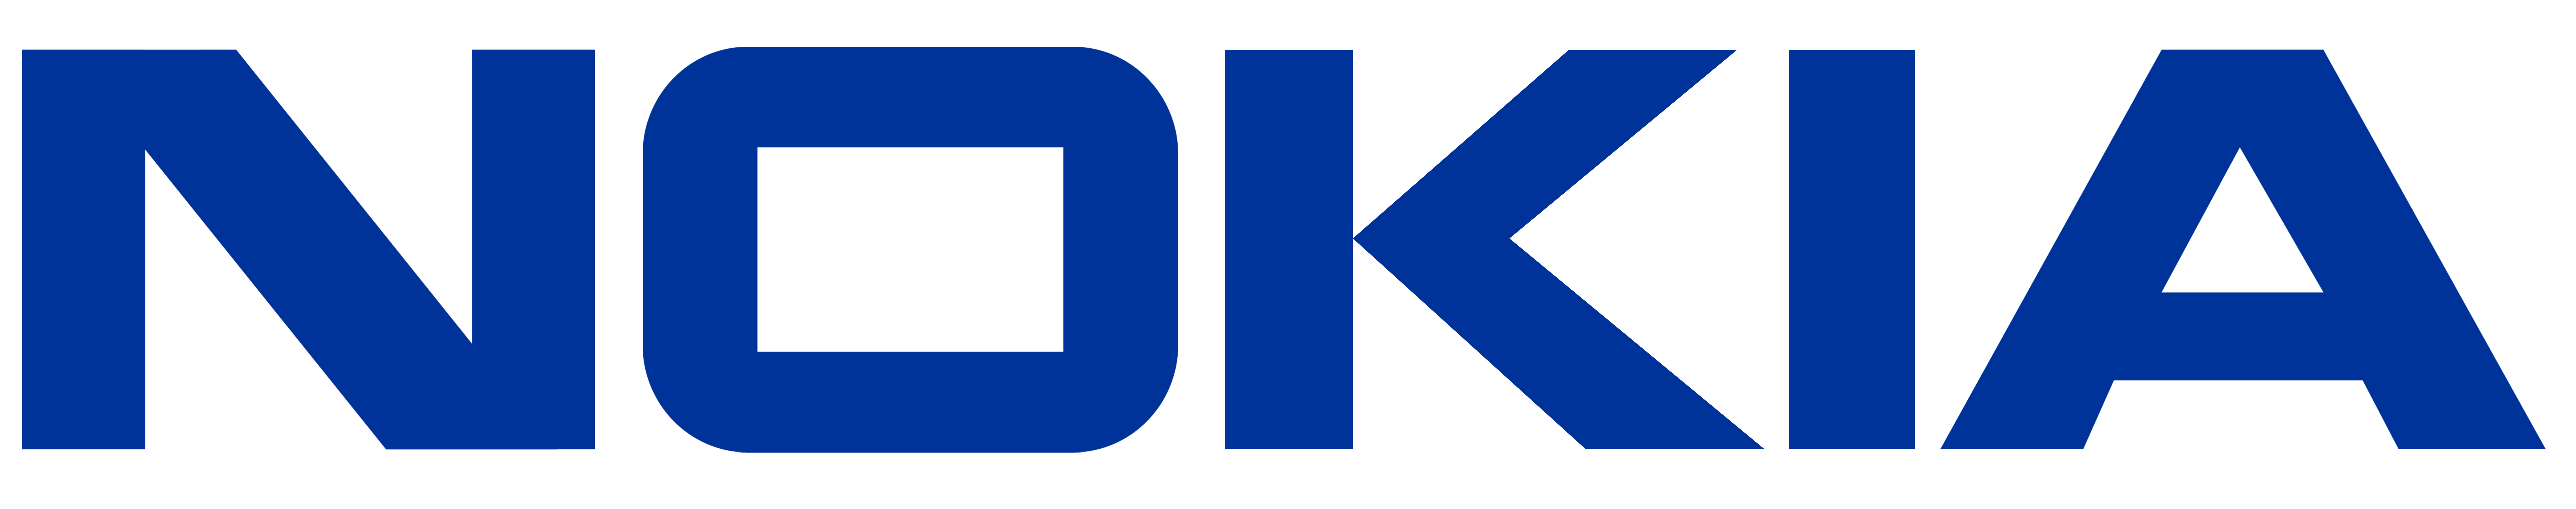 Nokia Corporation Logo - Nokia Logo Png - Free Transparent PNG Logos